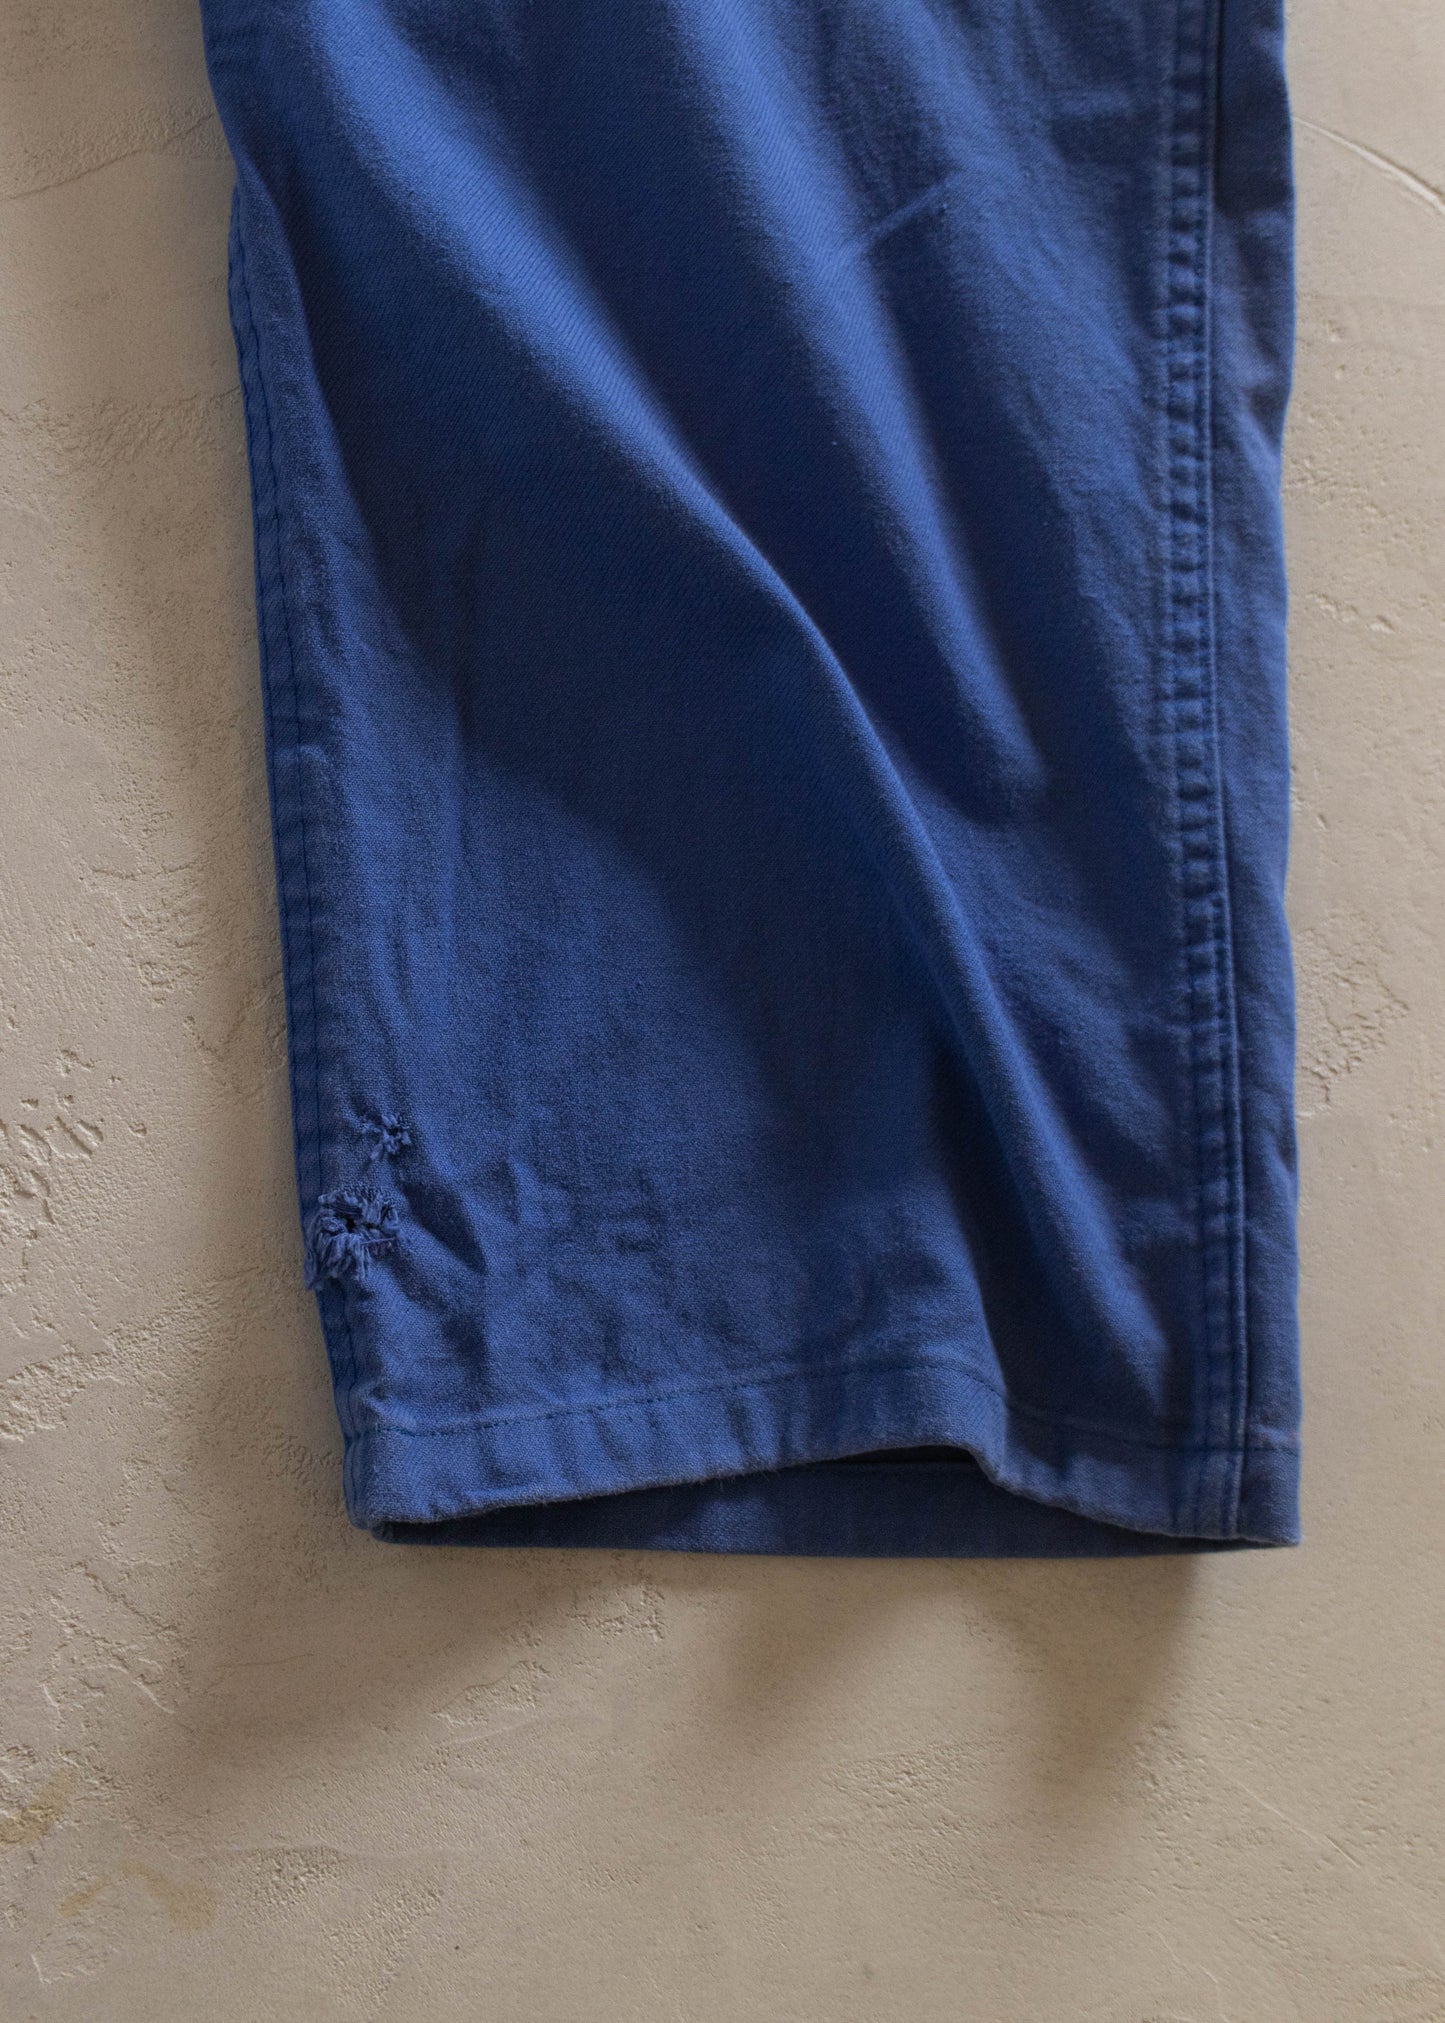 1980s Dubure & Deverchère French Workwear Chore Pants Size Women's 40 Men's 42